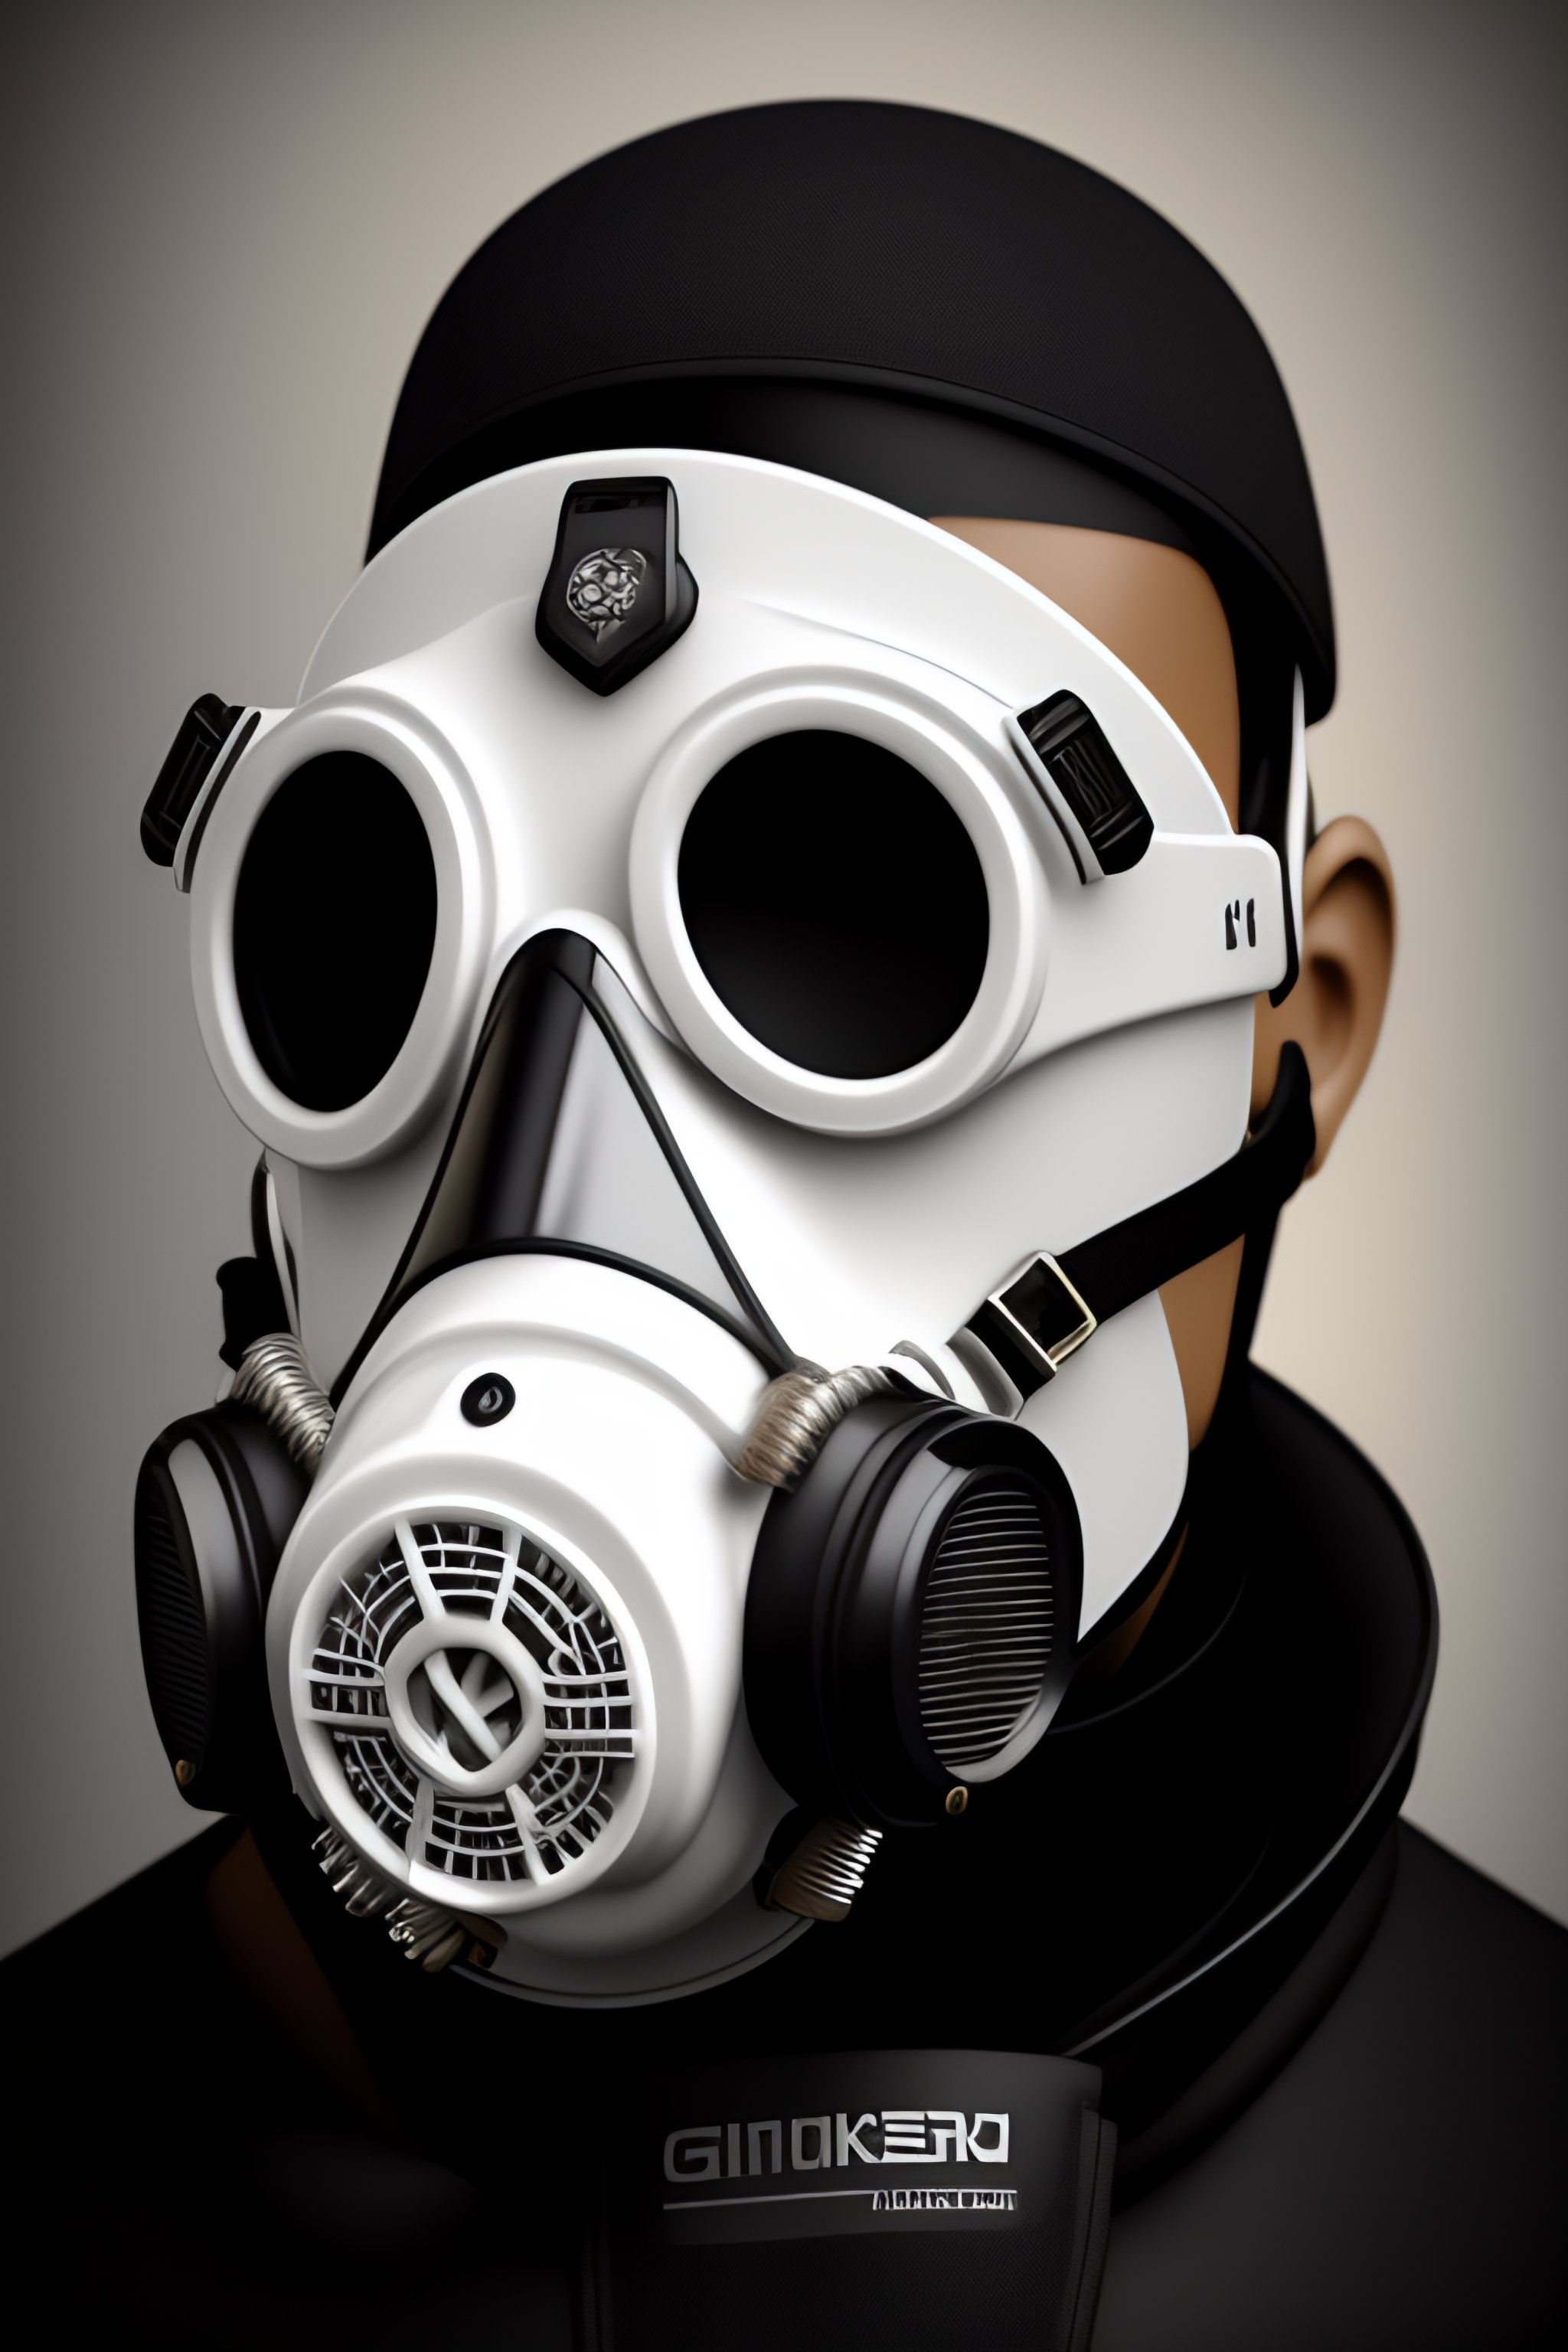 Lexica Cyberpunk Gas Mask White And Black Intricate Details Gaudi 3020